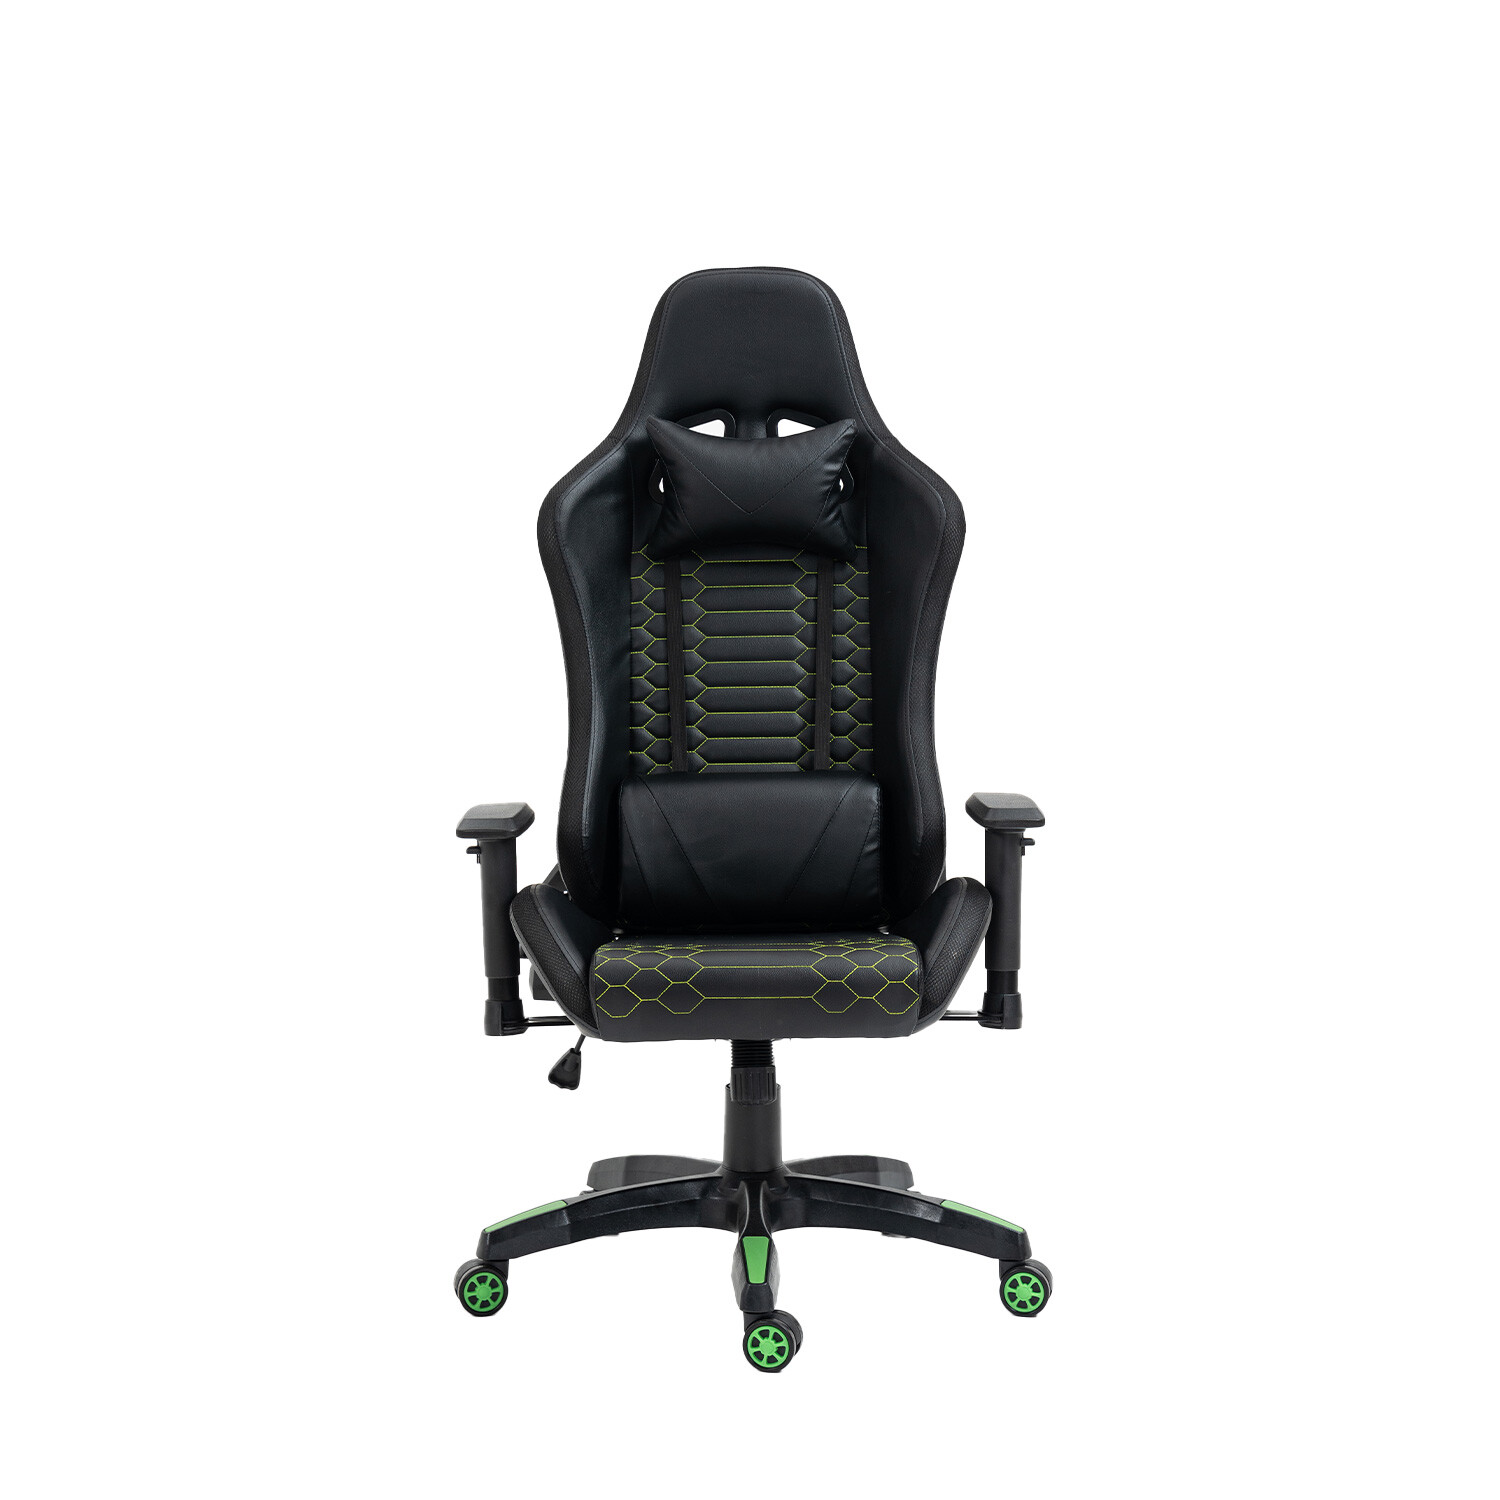 Triton LED Gaming Chair - Black Image 4